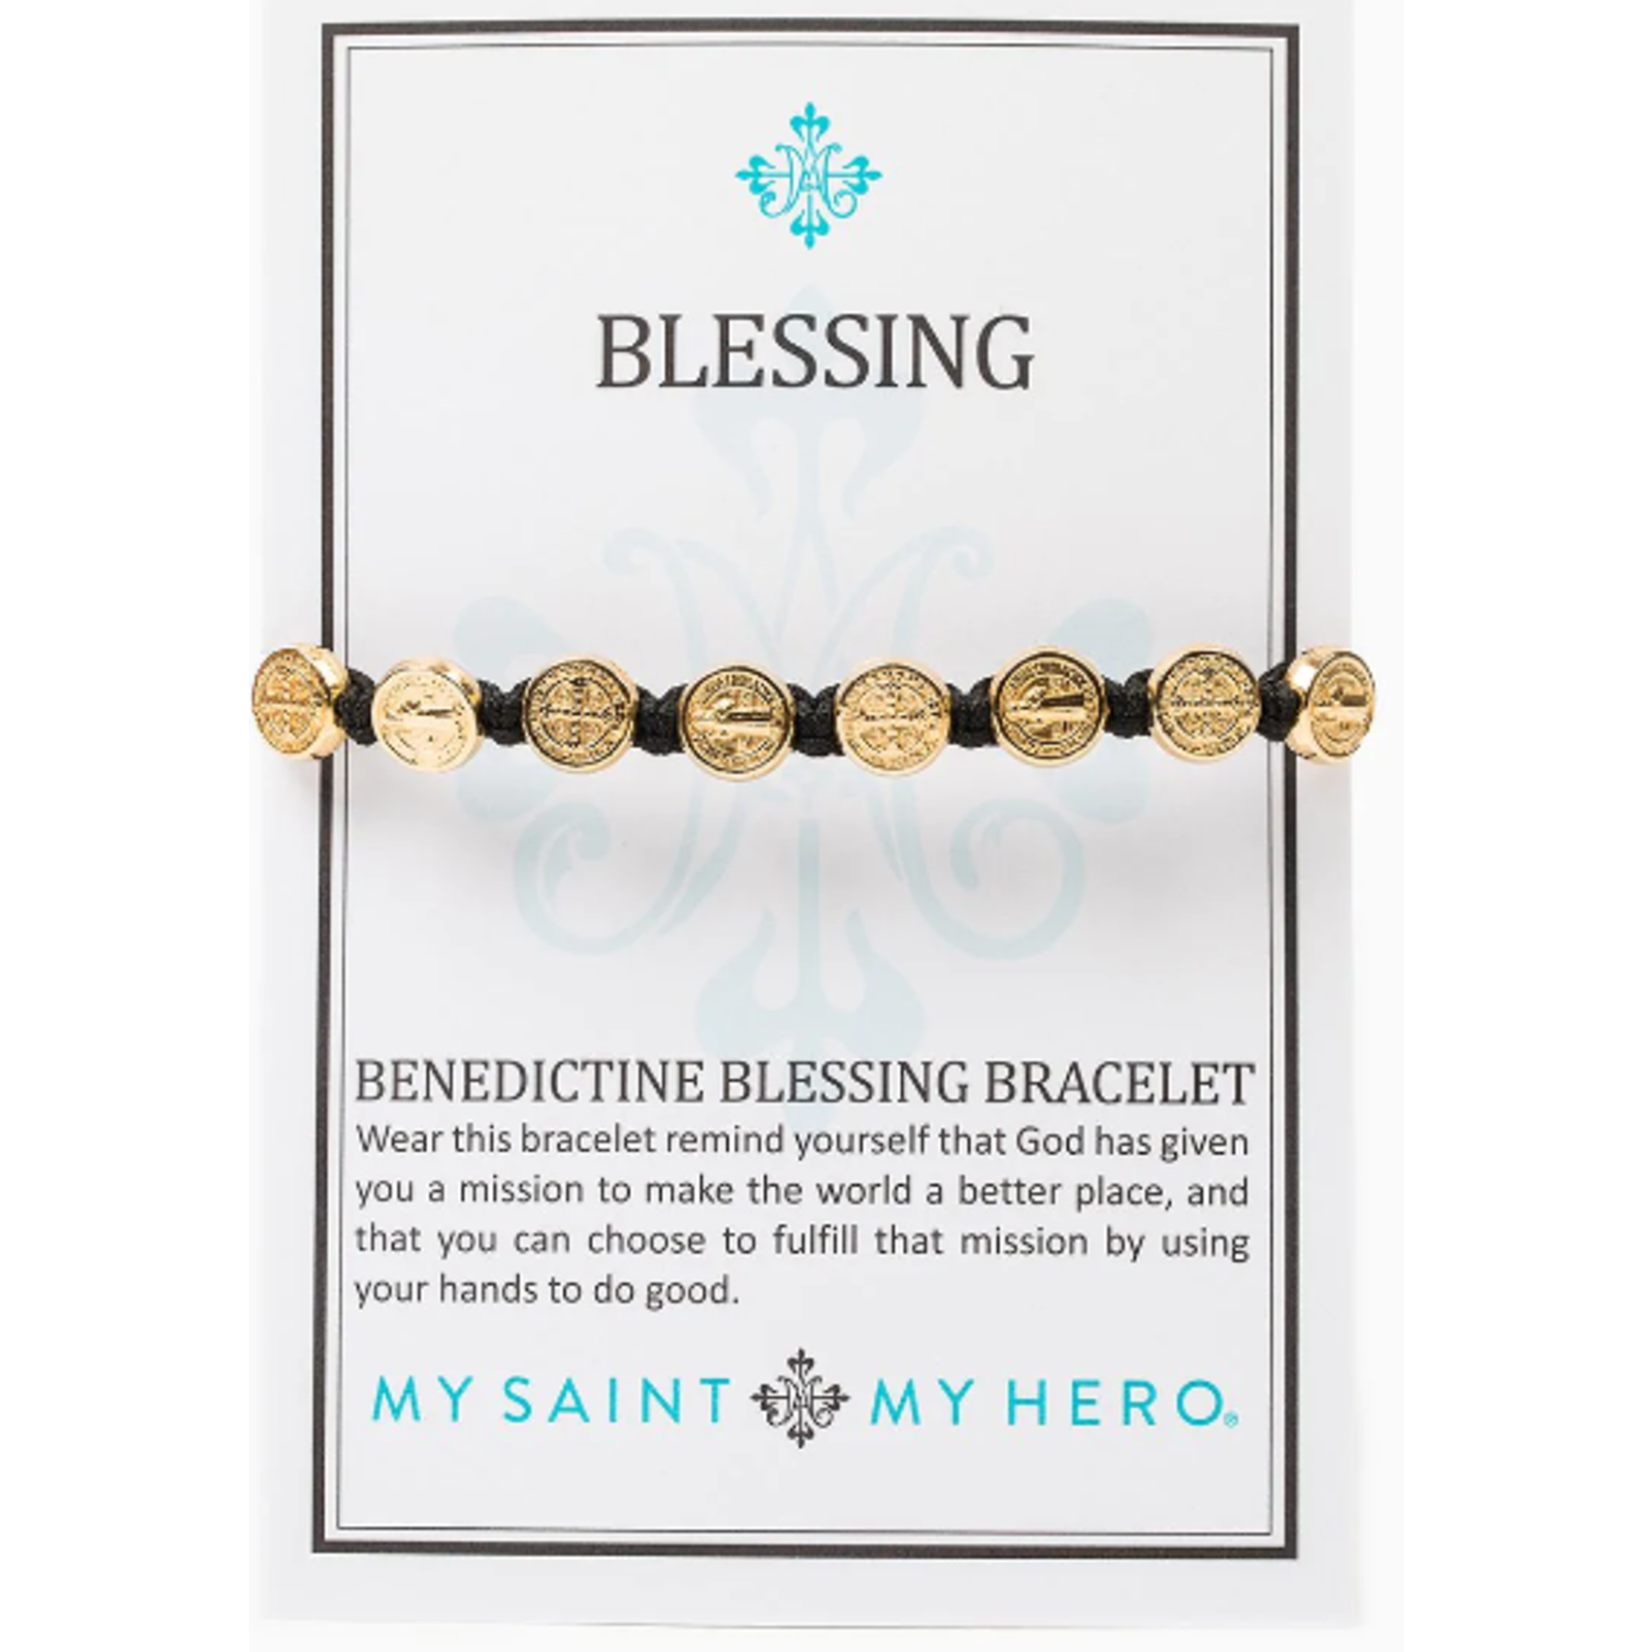 My Saint My Hero Benedictine Blessing Bracelet - Gold Medals